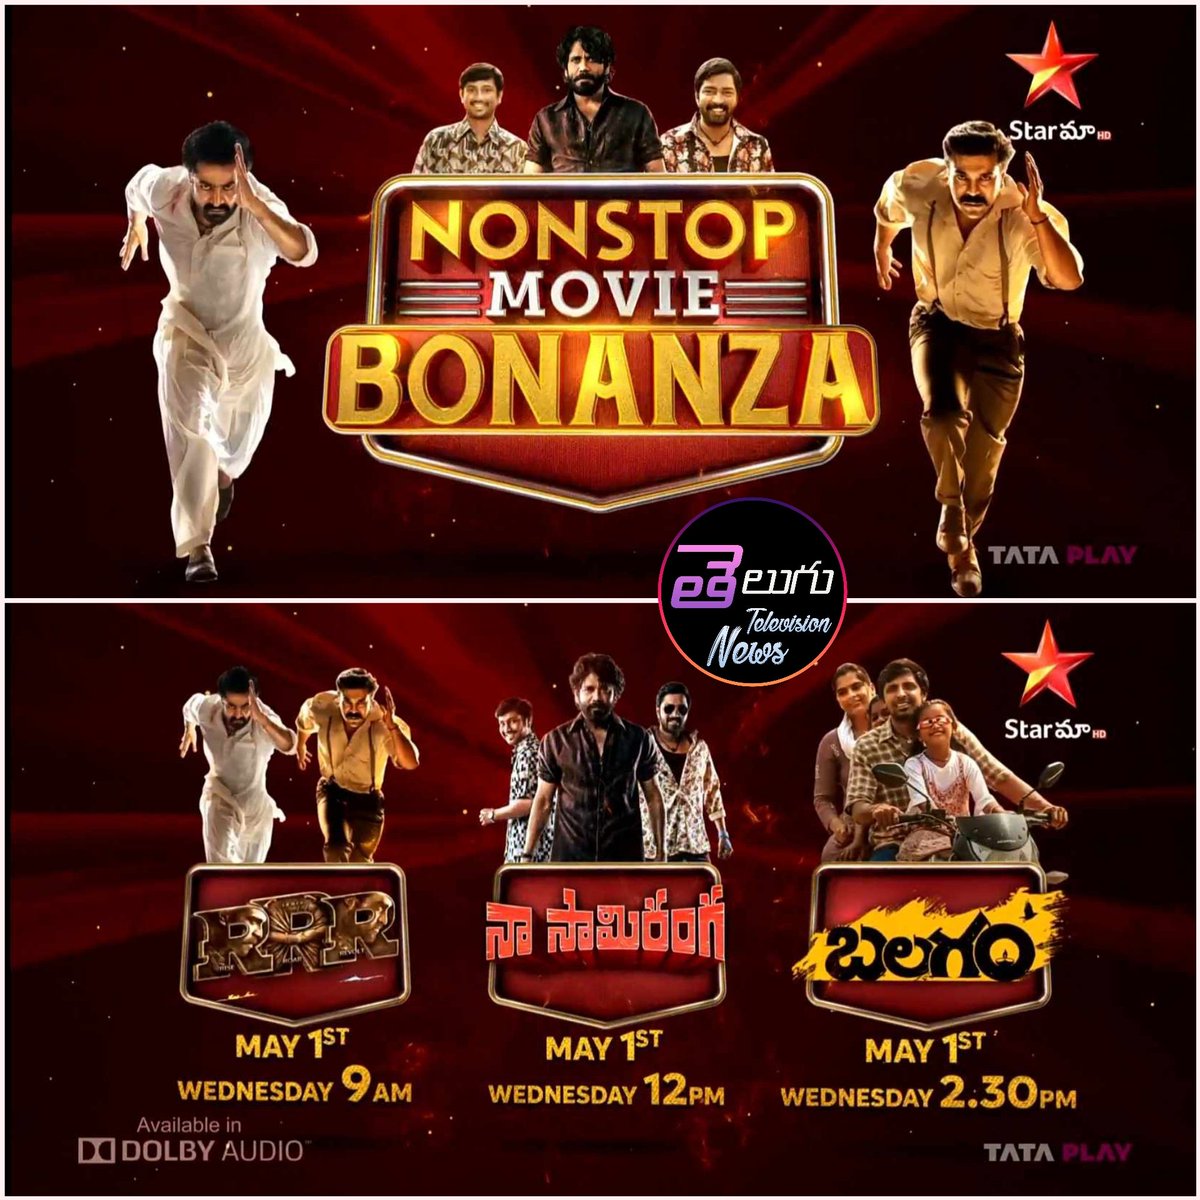 Non Stop Movie Bonanza

May 1st On #starmaa 

9am:- #RRRMovie 
12pm:- #NaaSaamiRanga 
2.30pm:- #balagam  

#NTR #ramcharan #Nagarjuna #AllariNaresh #RajTarun #Priyadarshi #aliabhatt #ashikaranganath #Mirnaa  #RuksharDhillon #kavyakalyanram